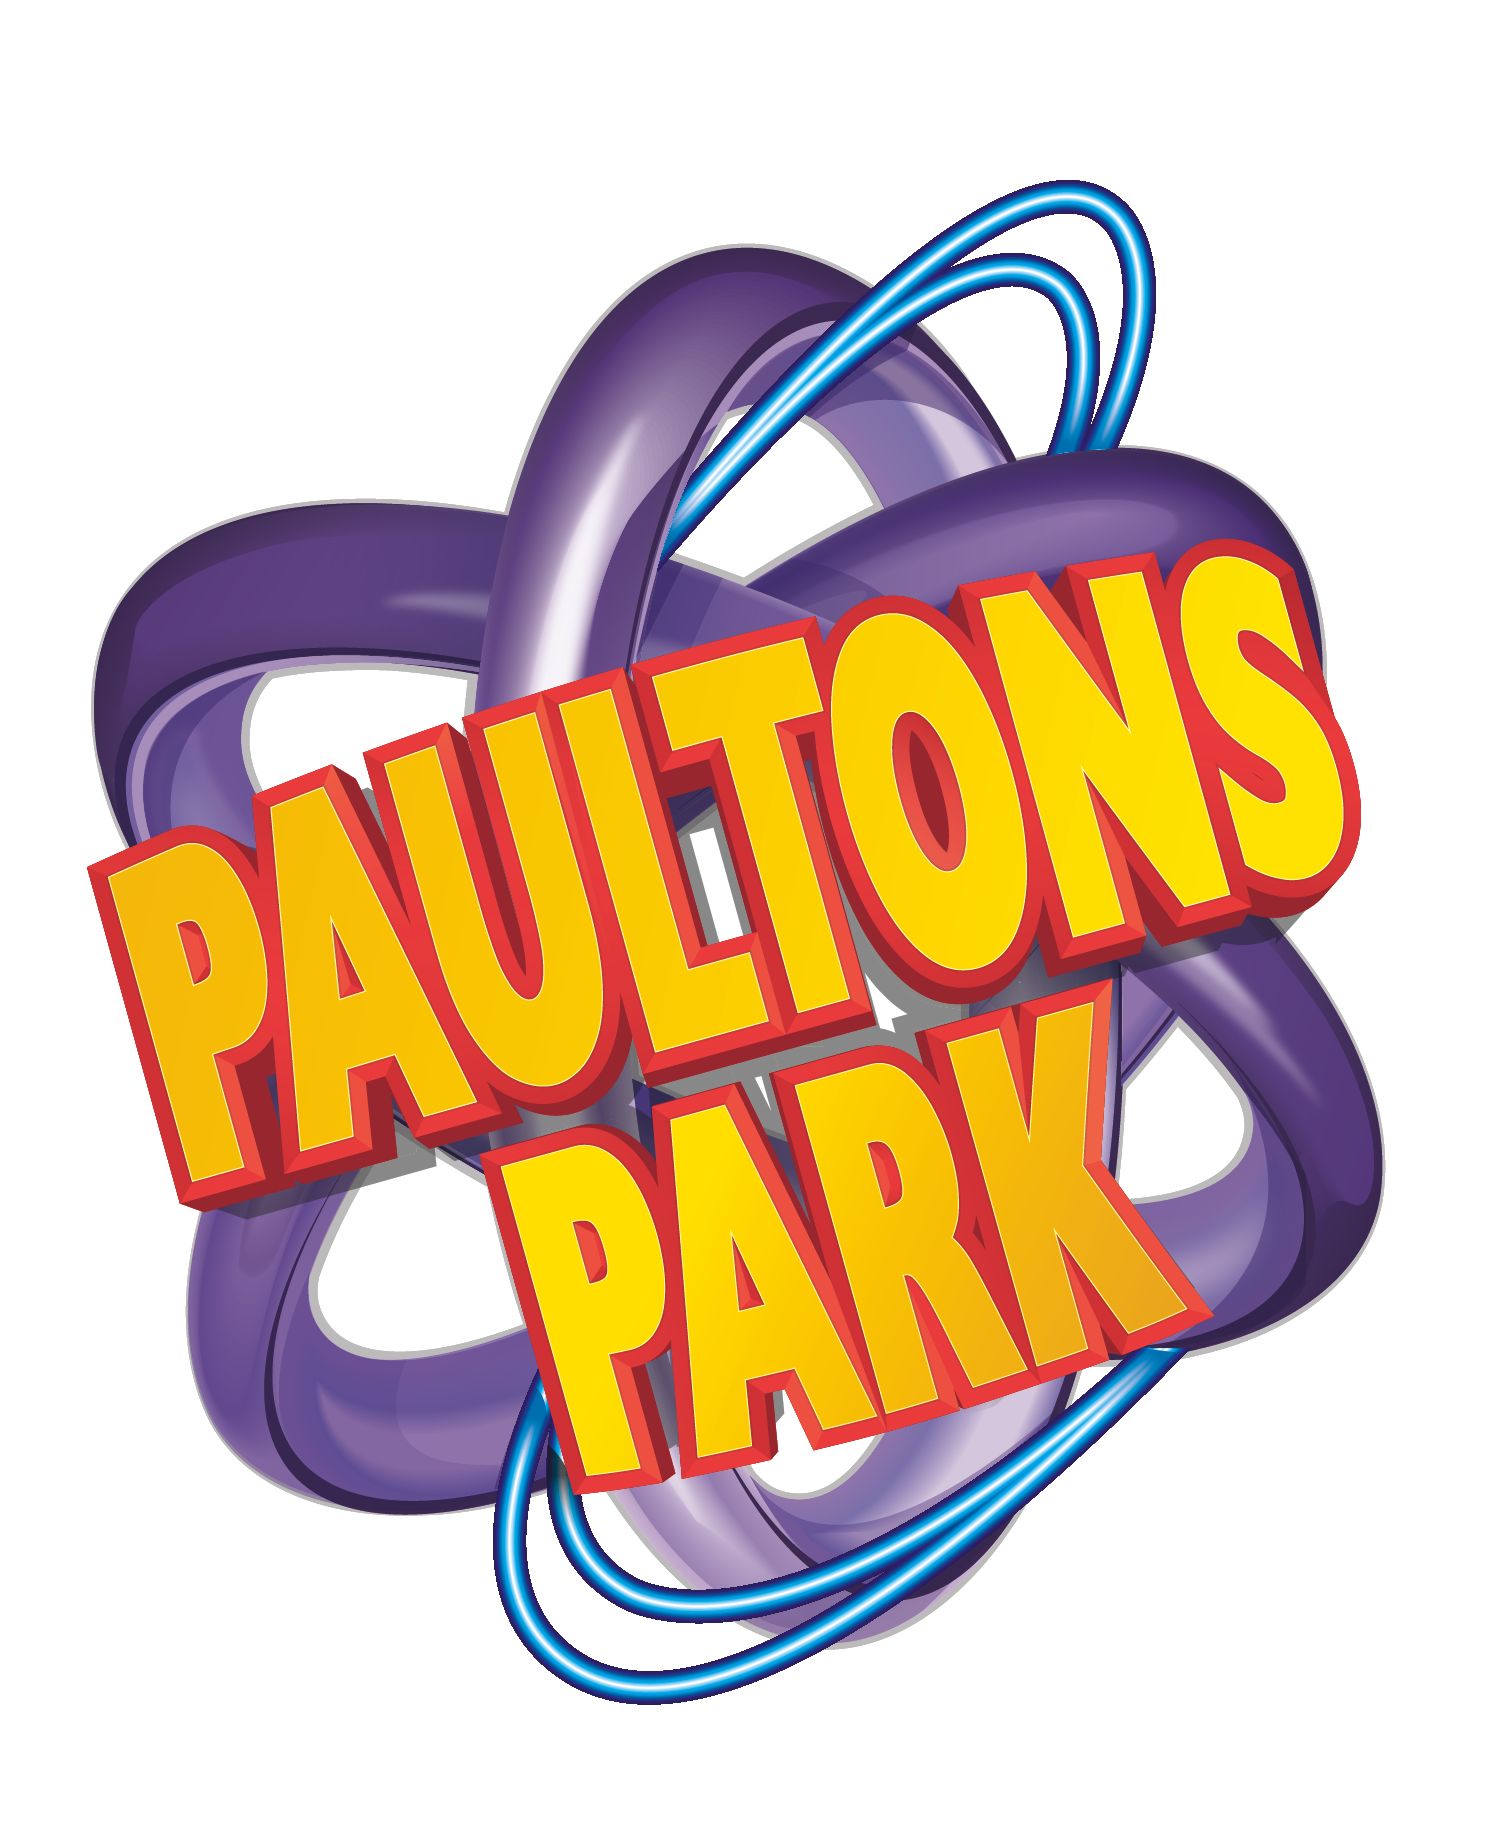 Paulton Park